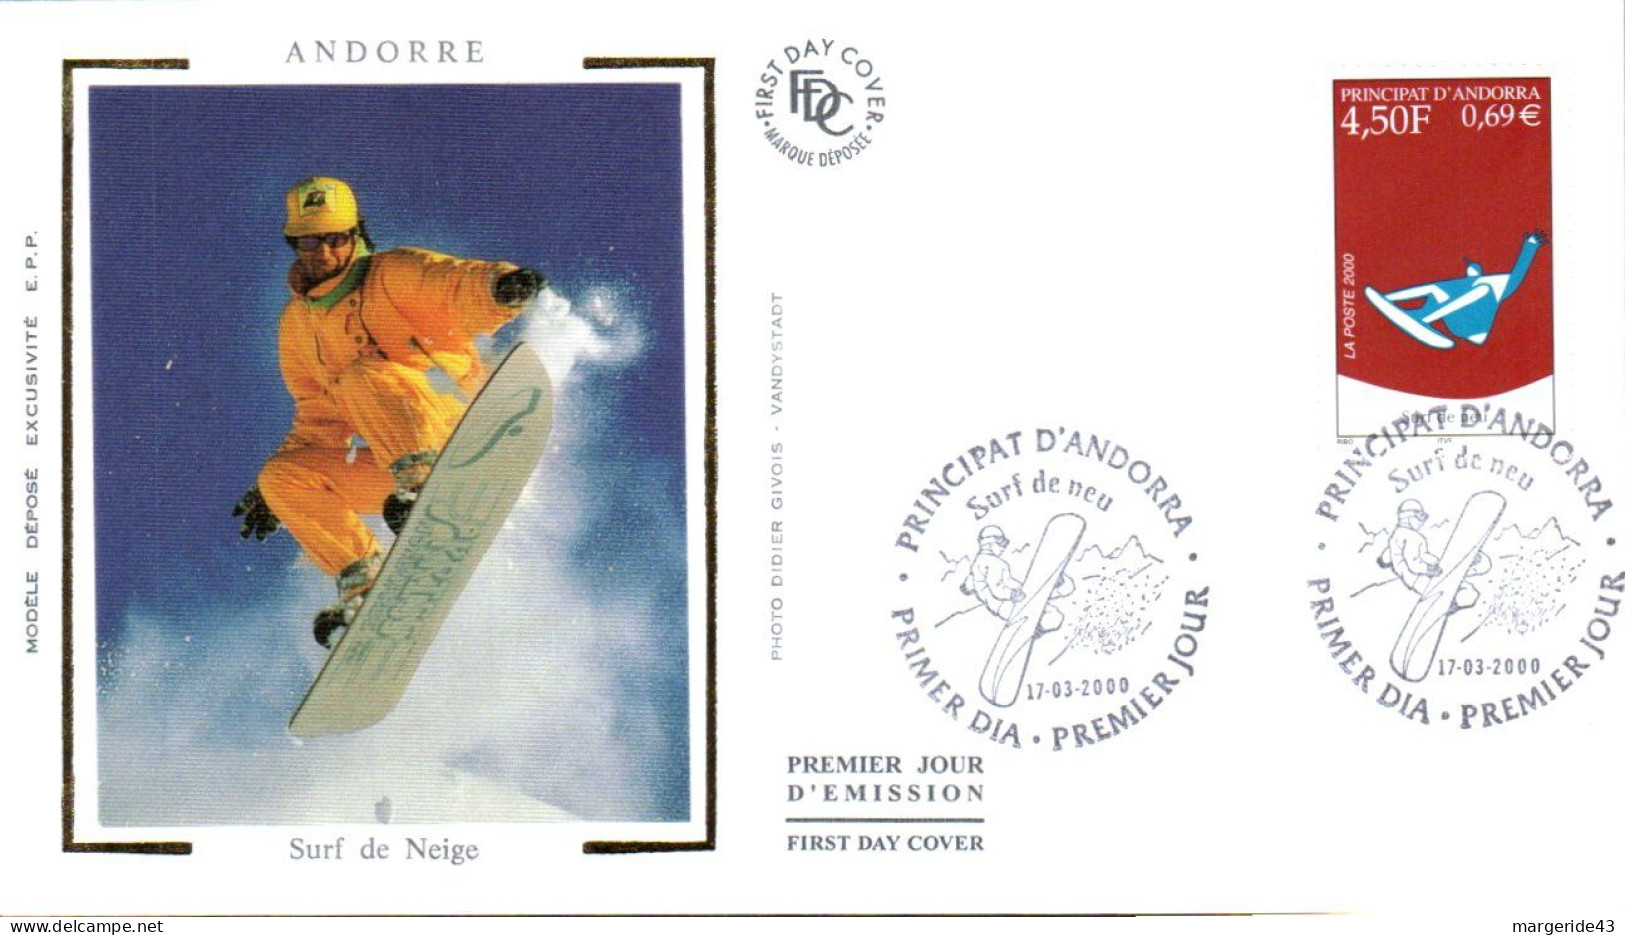 ANDORRE FDC 2000 SURF DE NEIGE - FDC